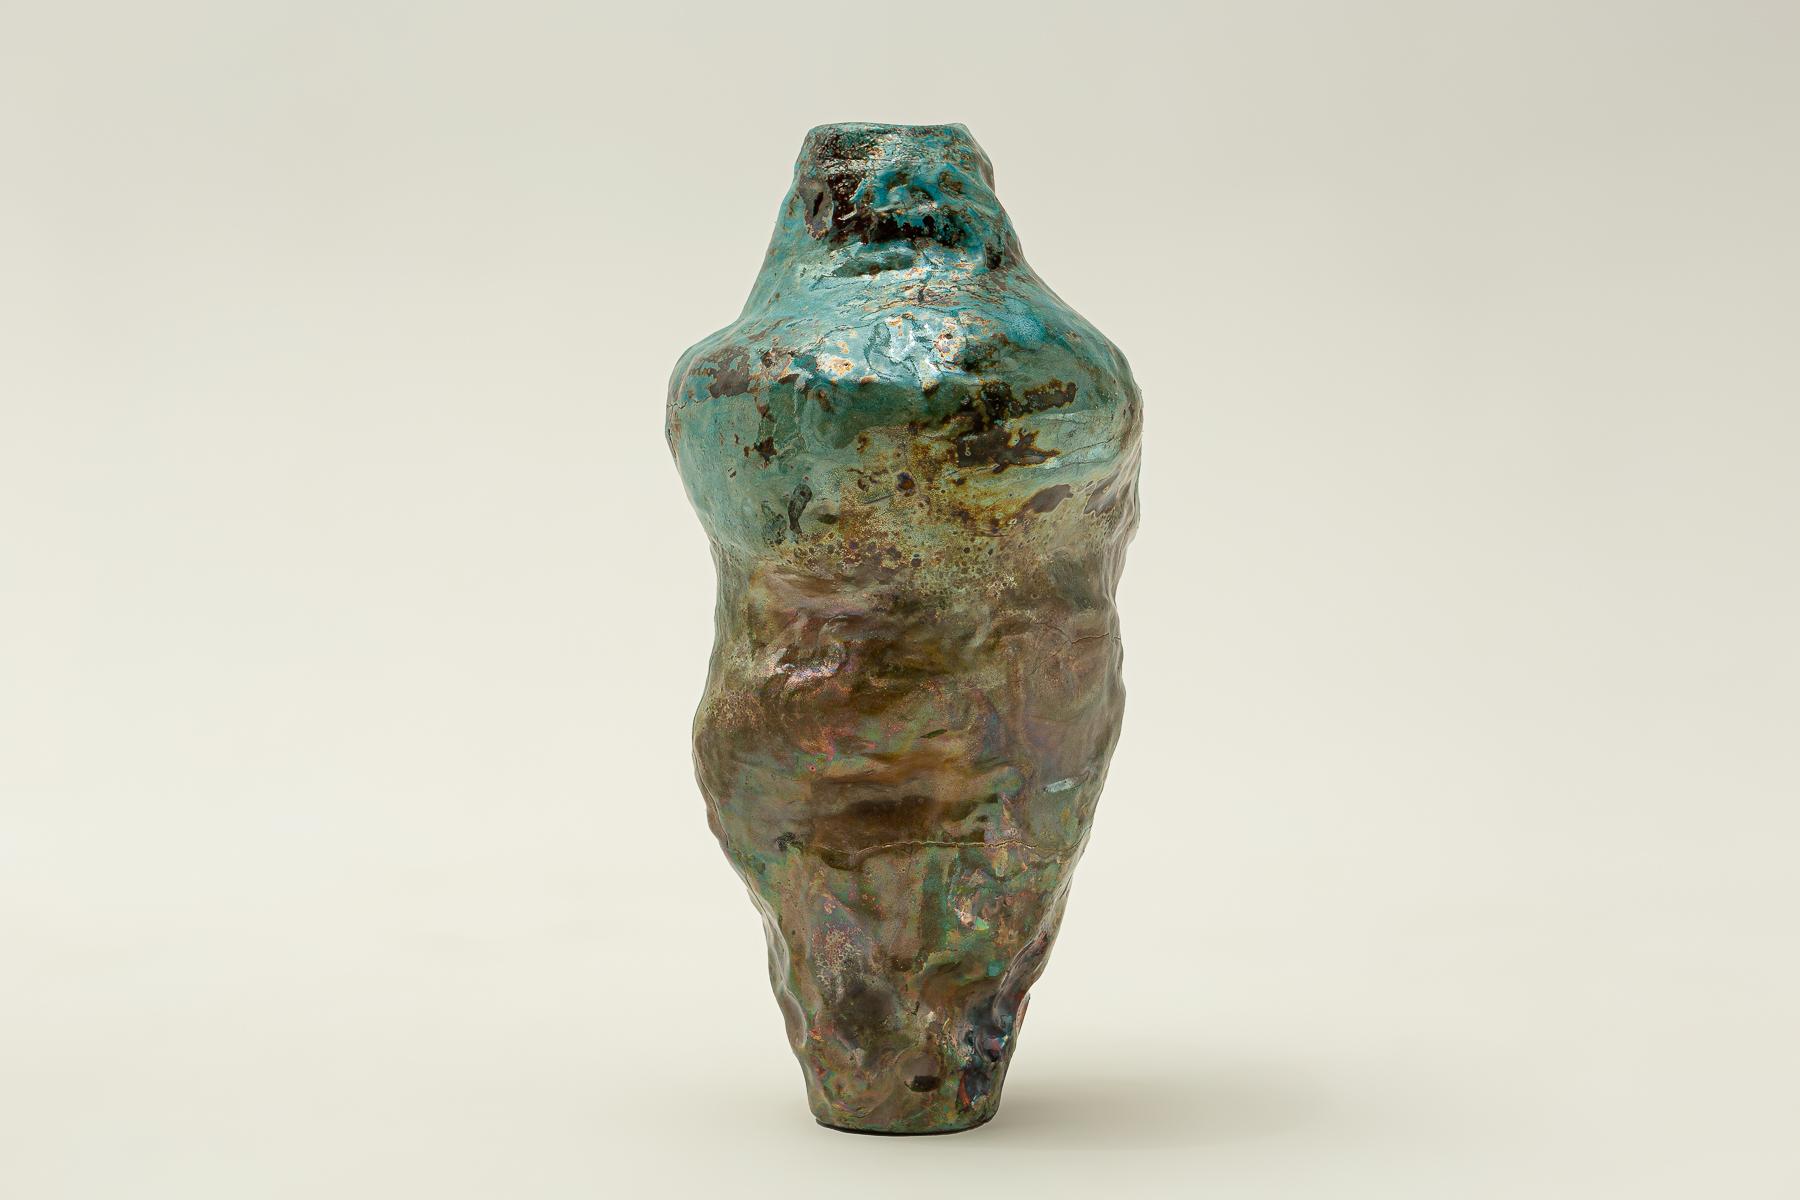 Glazed Ceramic Vase Fired in Raku Technique, Handmade, Unique Art For Sale